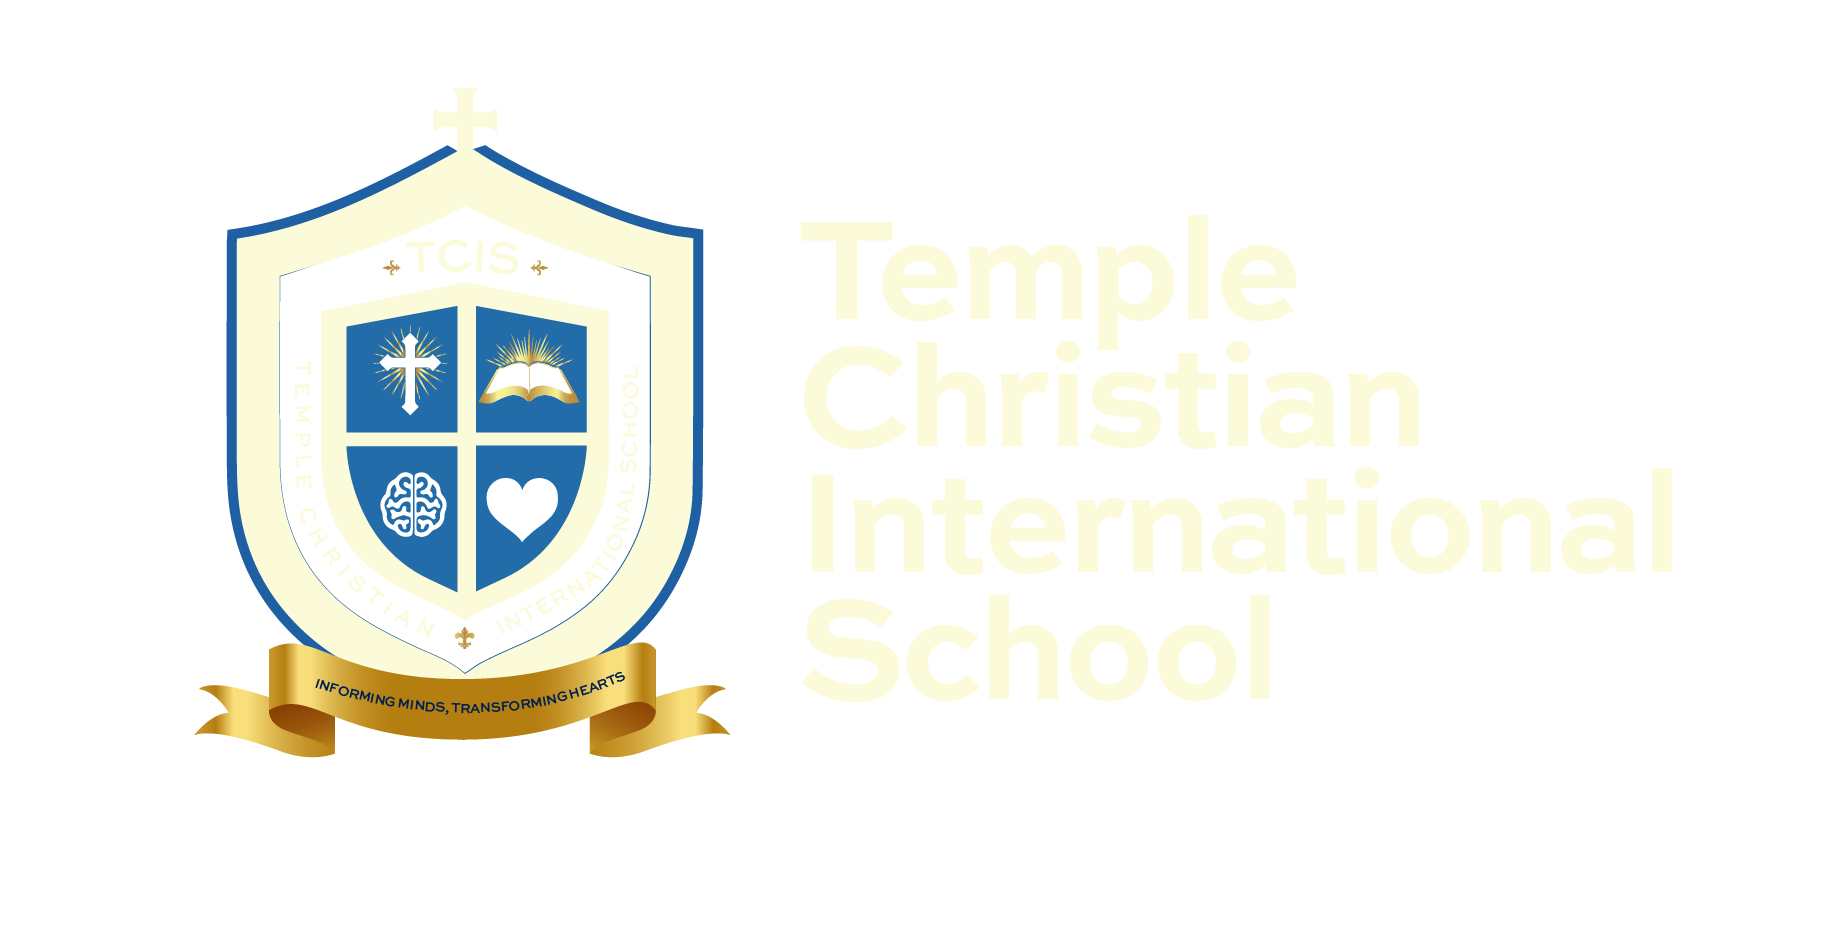 Temple Christian International College